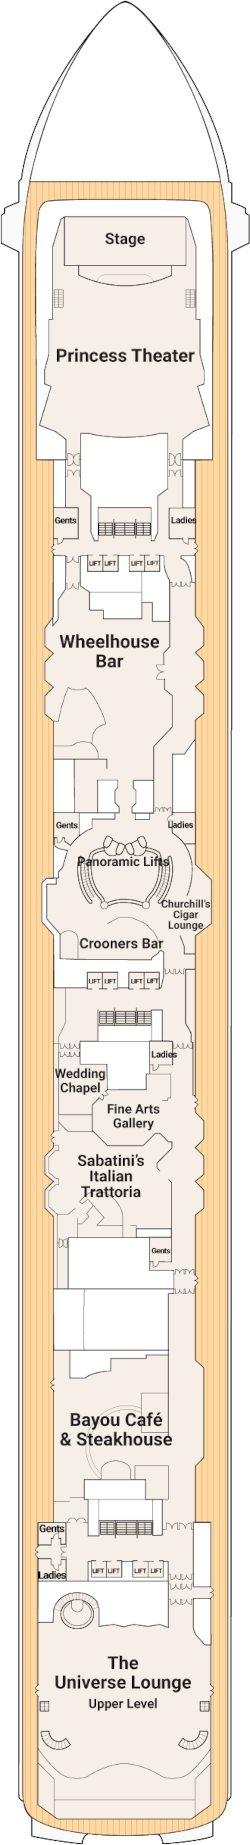 Coral Princess Promenade Deck Deck Plan